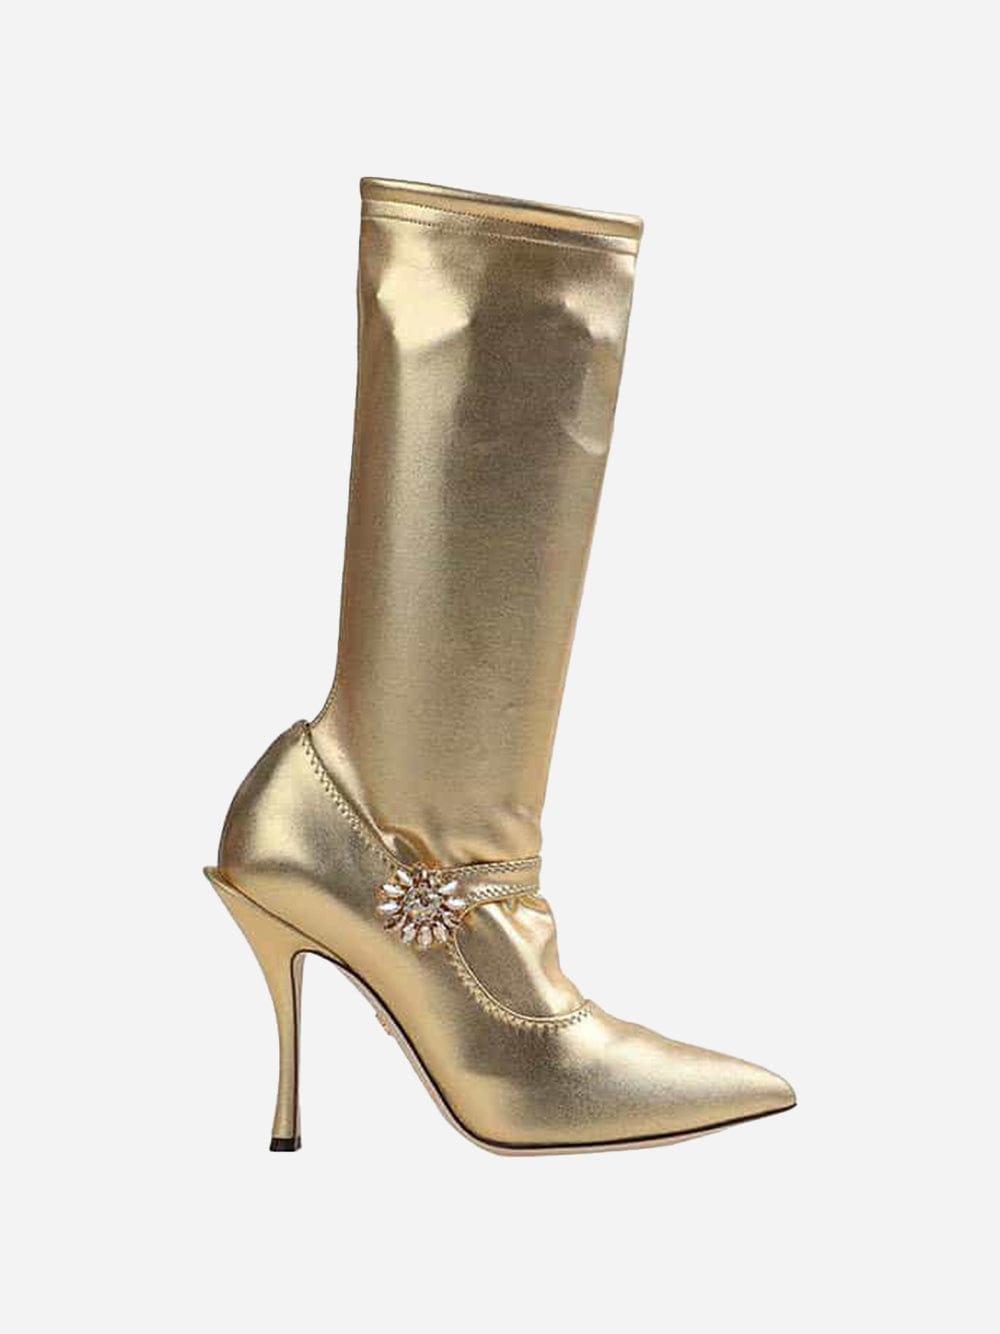 Dolce & Gabbana Embellished Ankle Boots